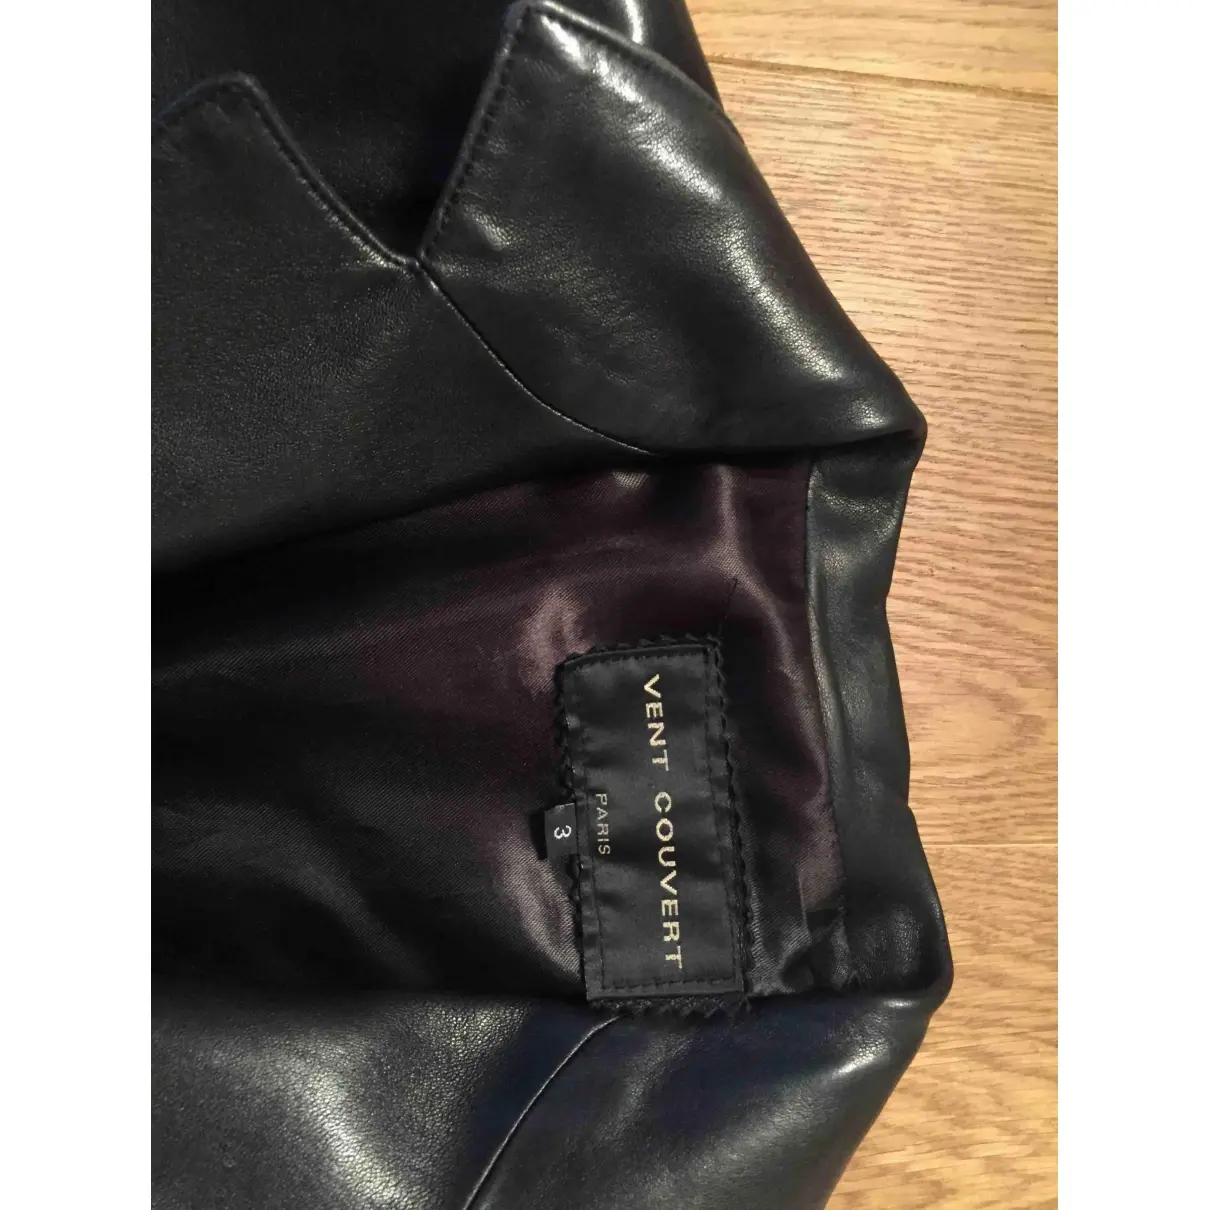 Buy Ventcouvert Leather blazer online